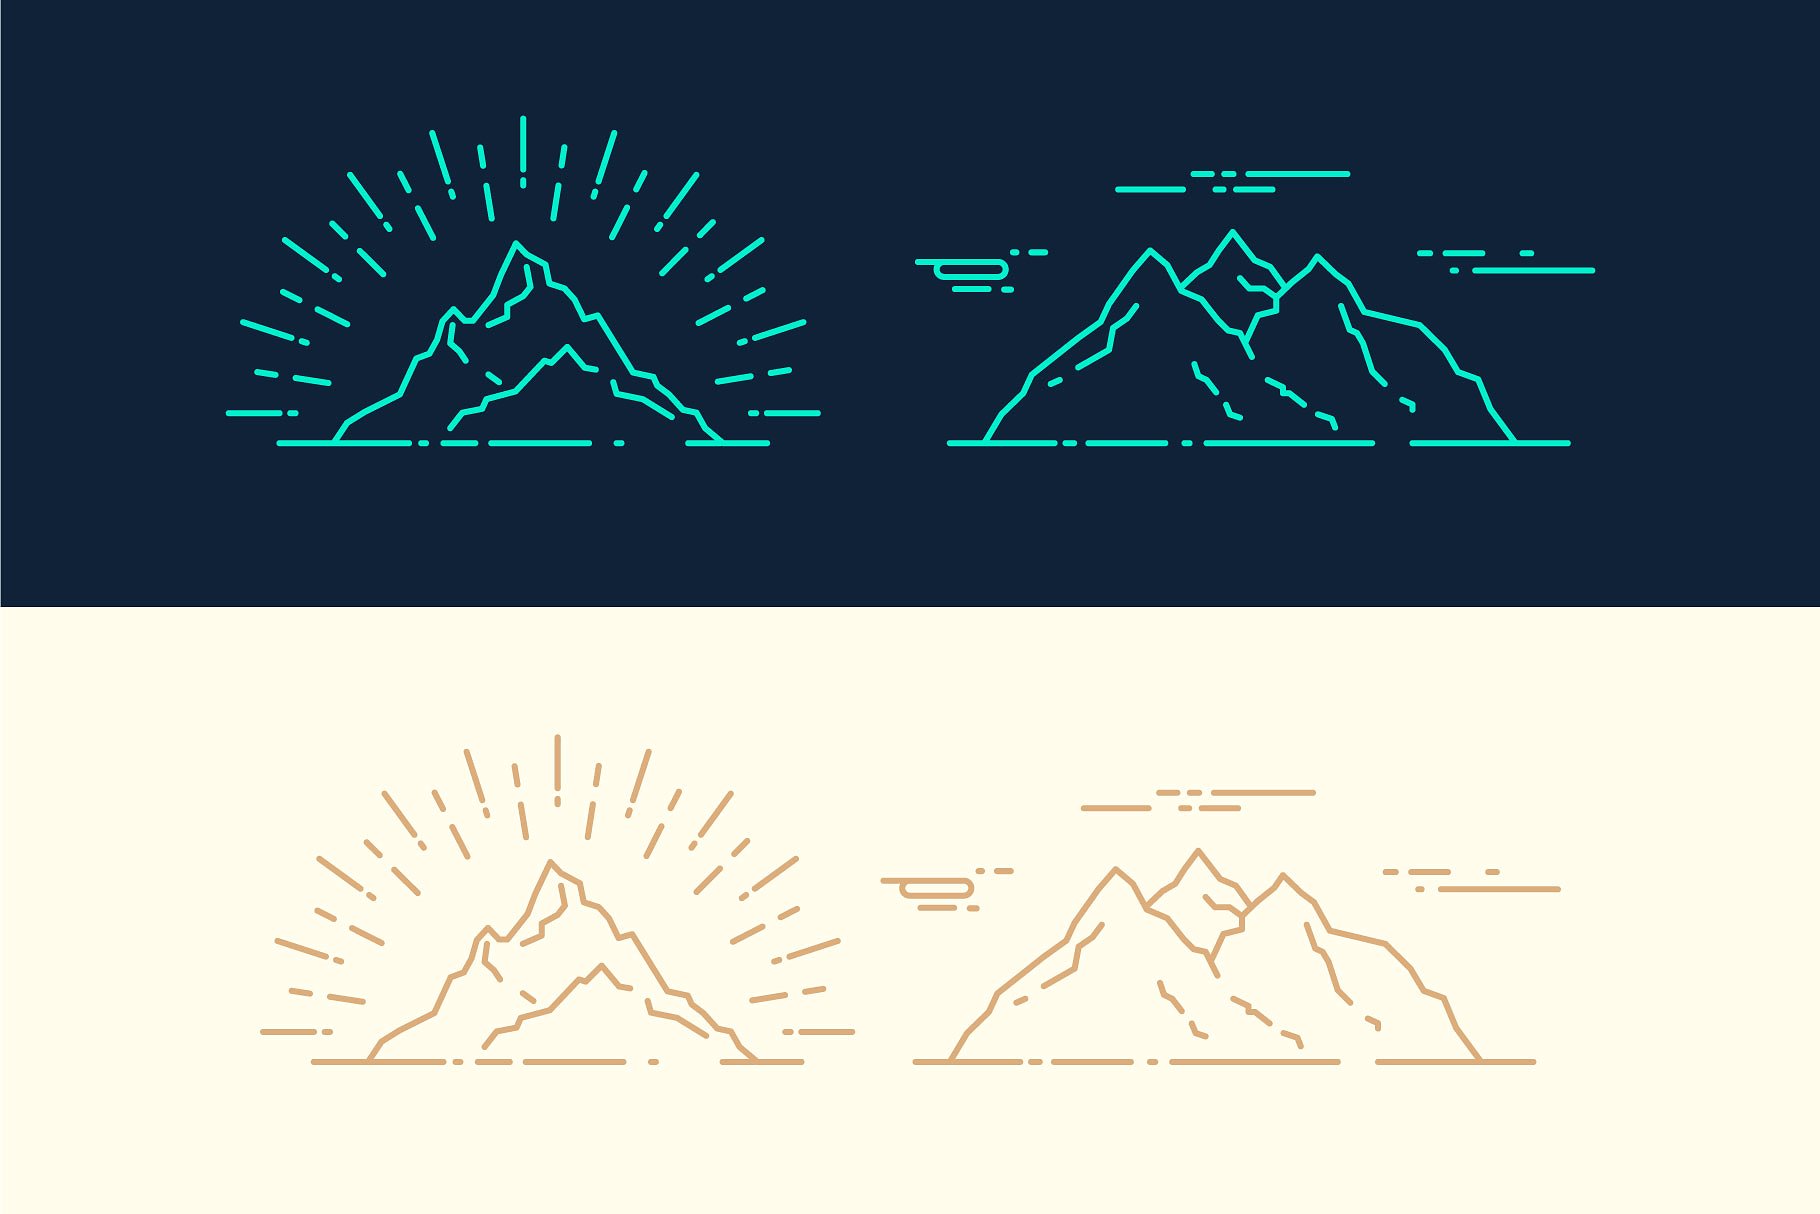 山脉线条图形插画 Set of linear mountains ranges插图(3)